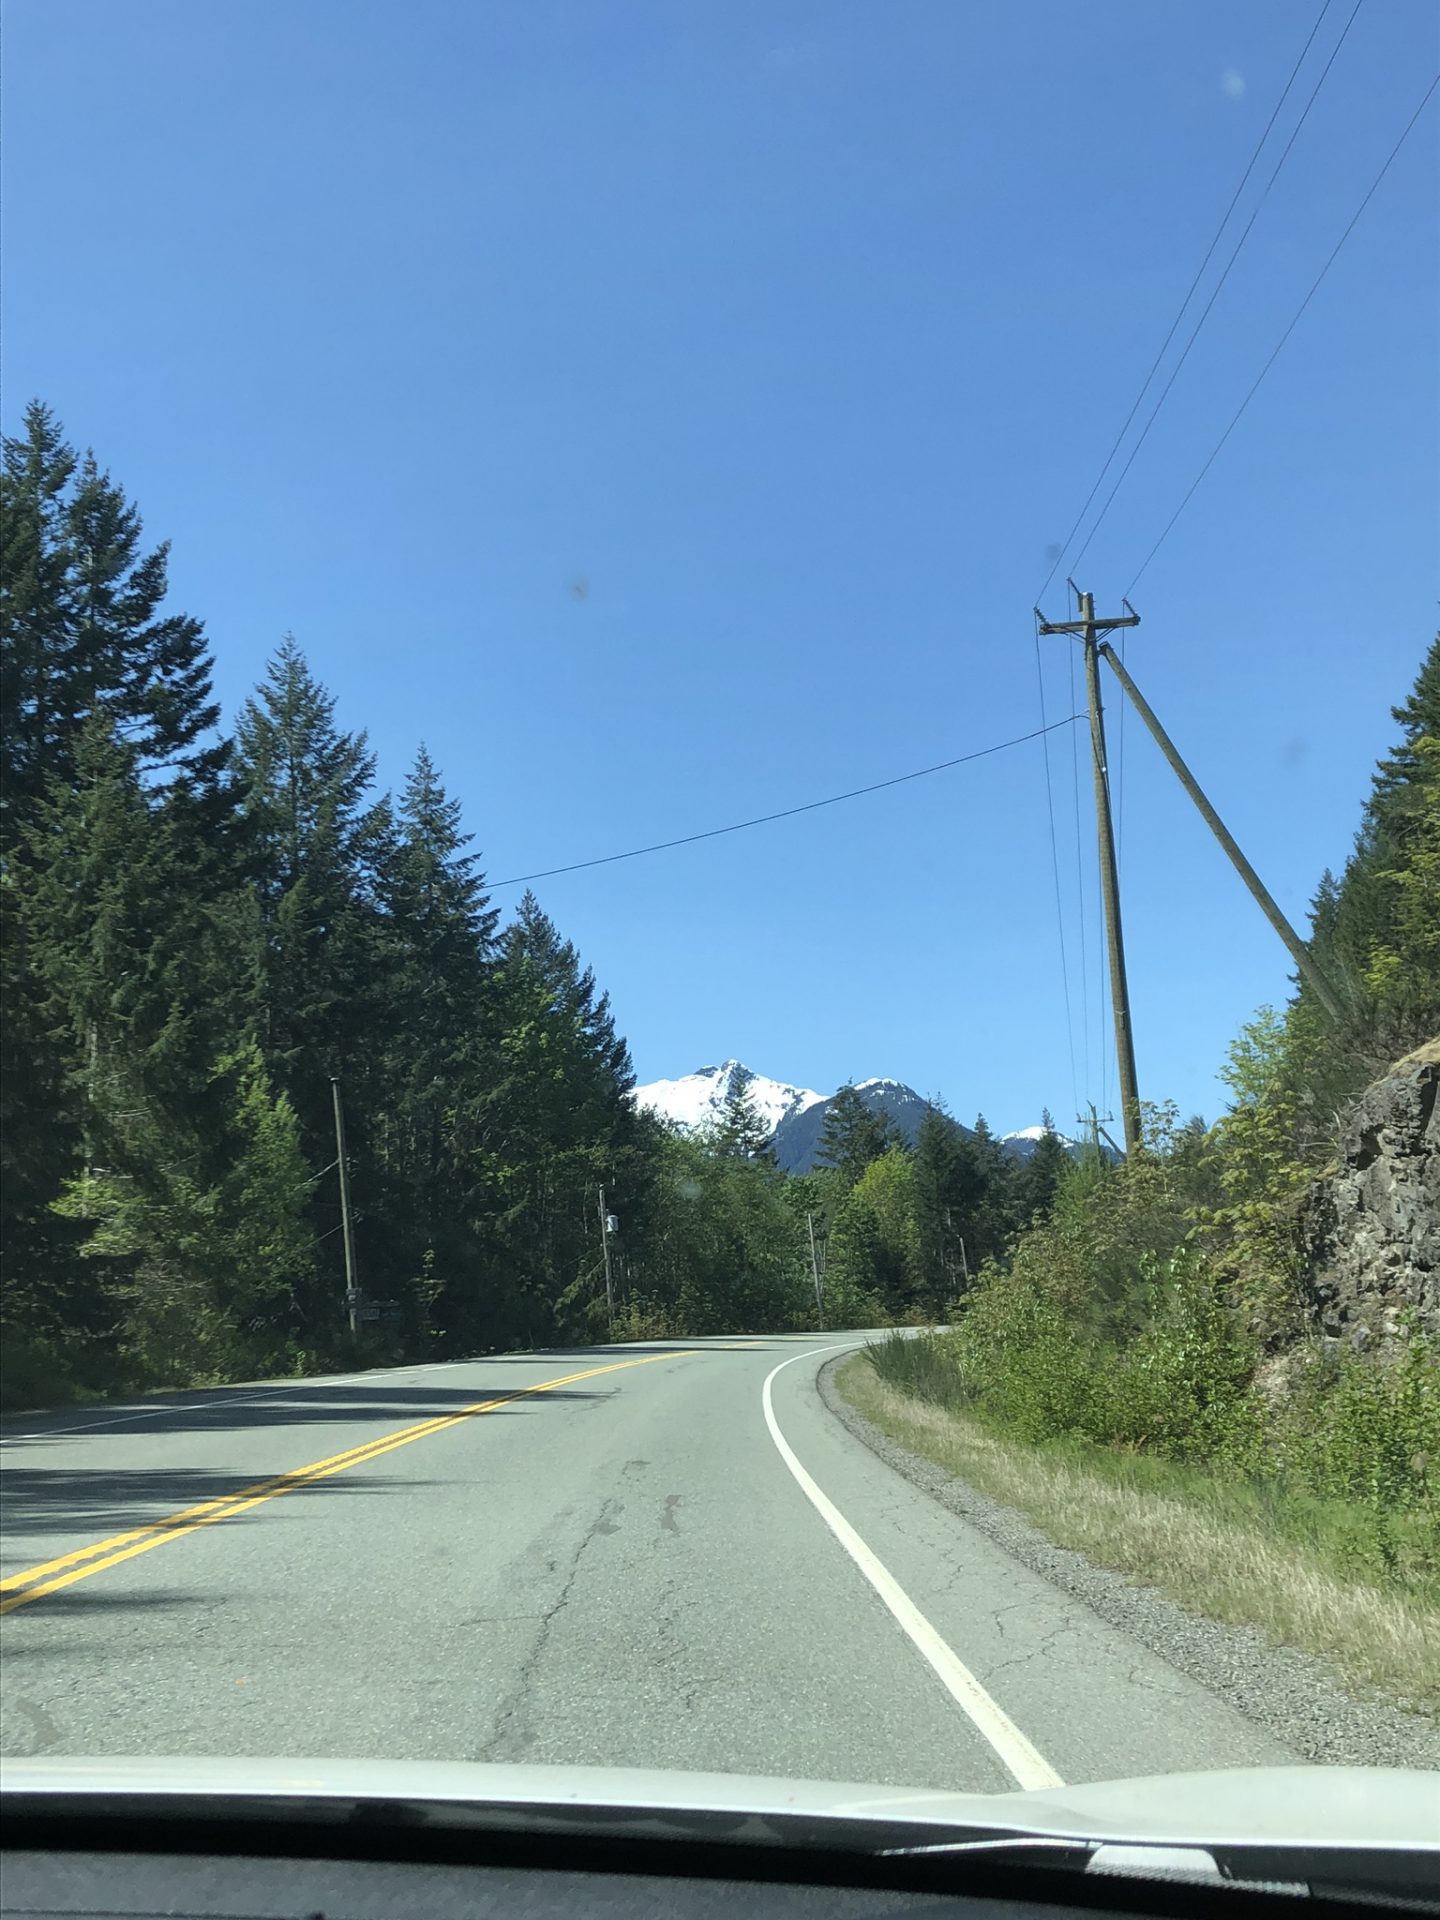 Driving to Tofino, Vancouver Island